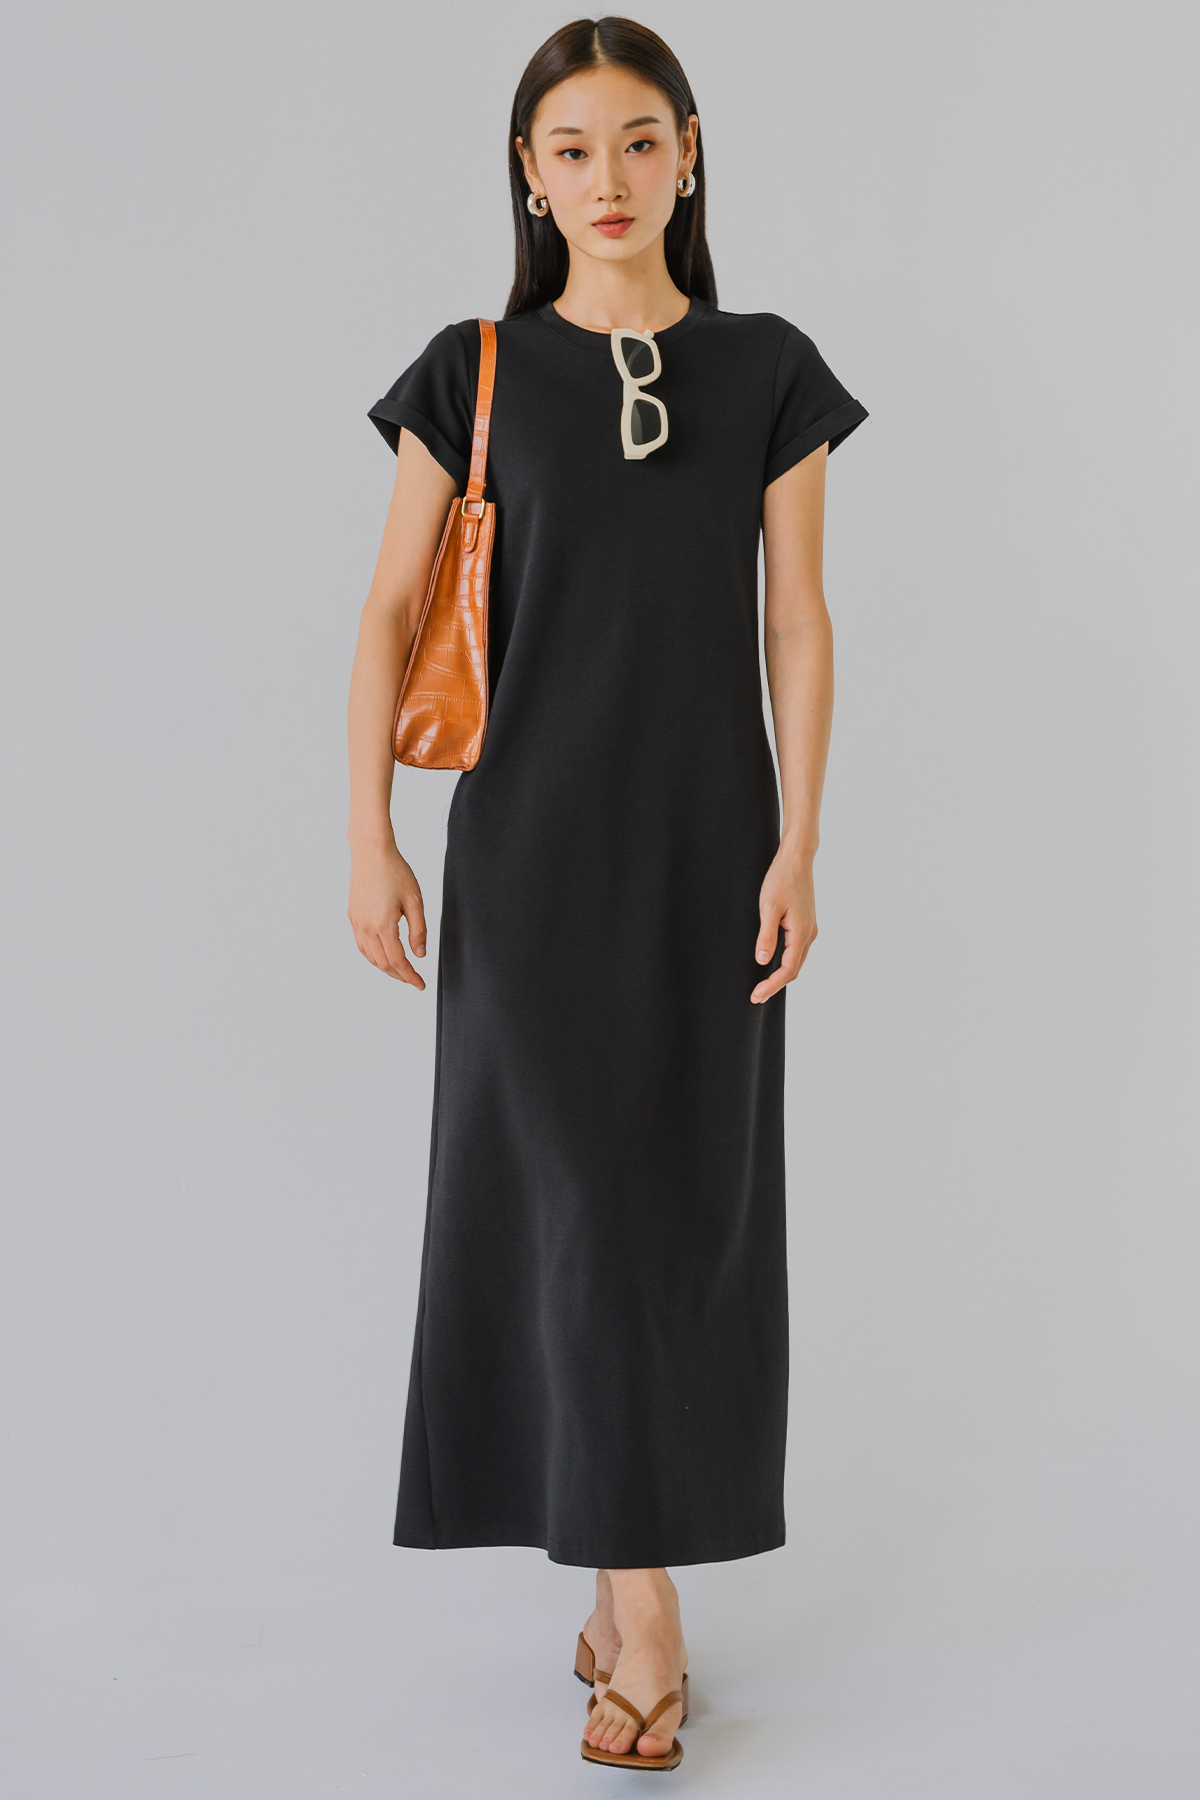 For Keeps Round Neck Midi Dress (Black)